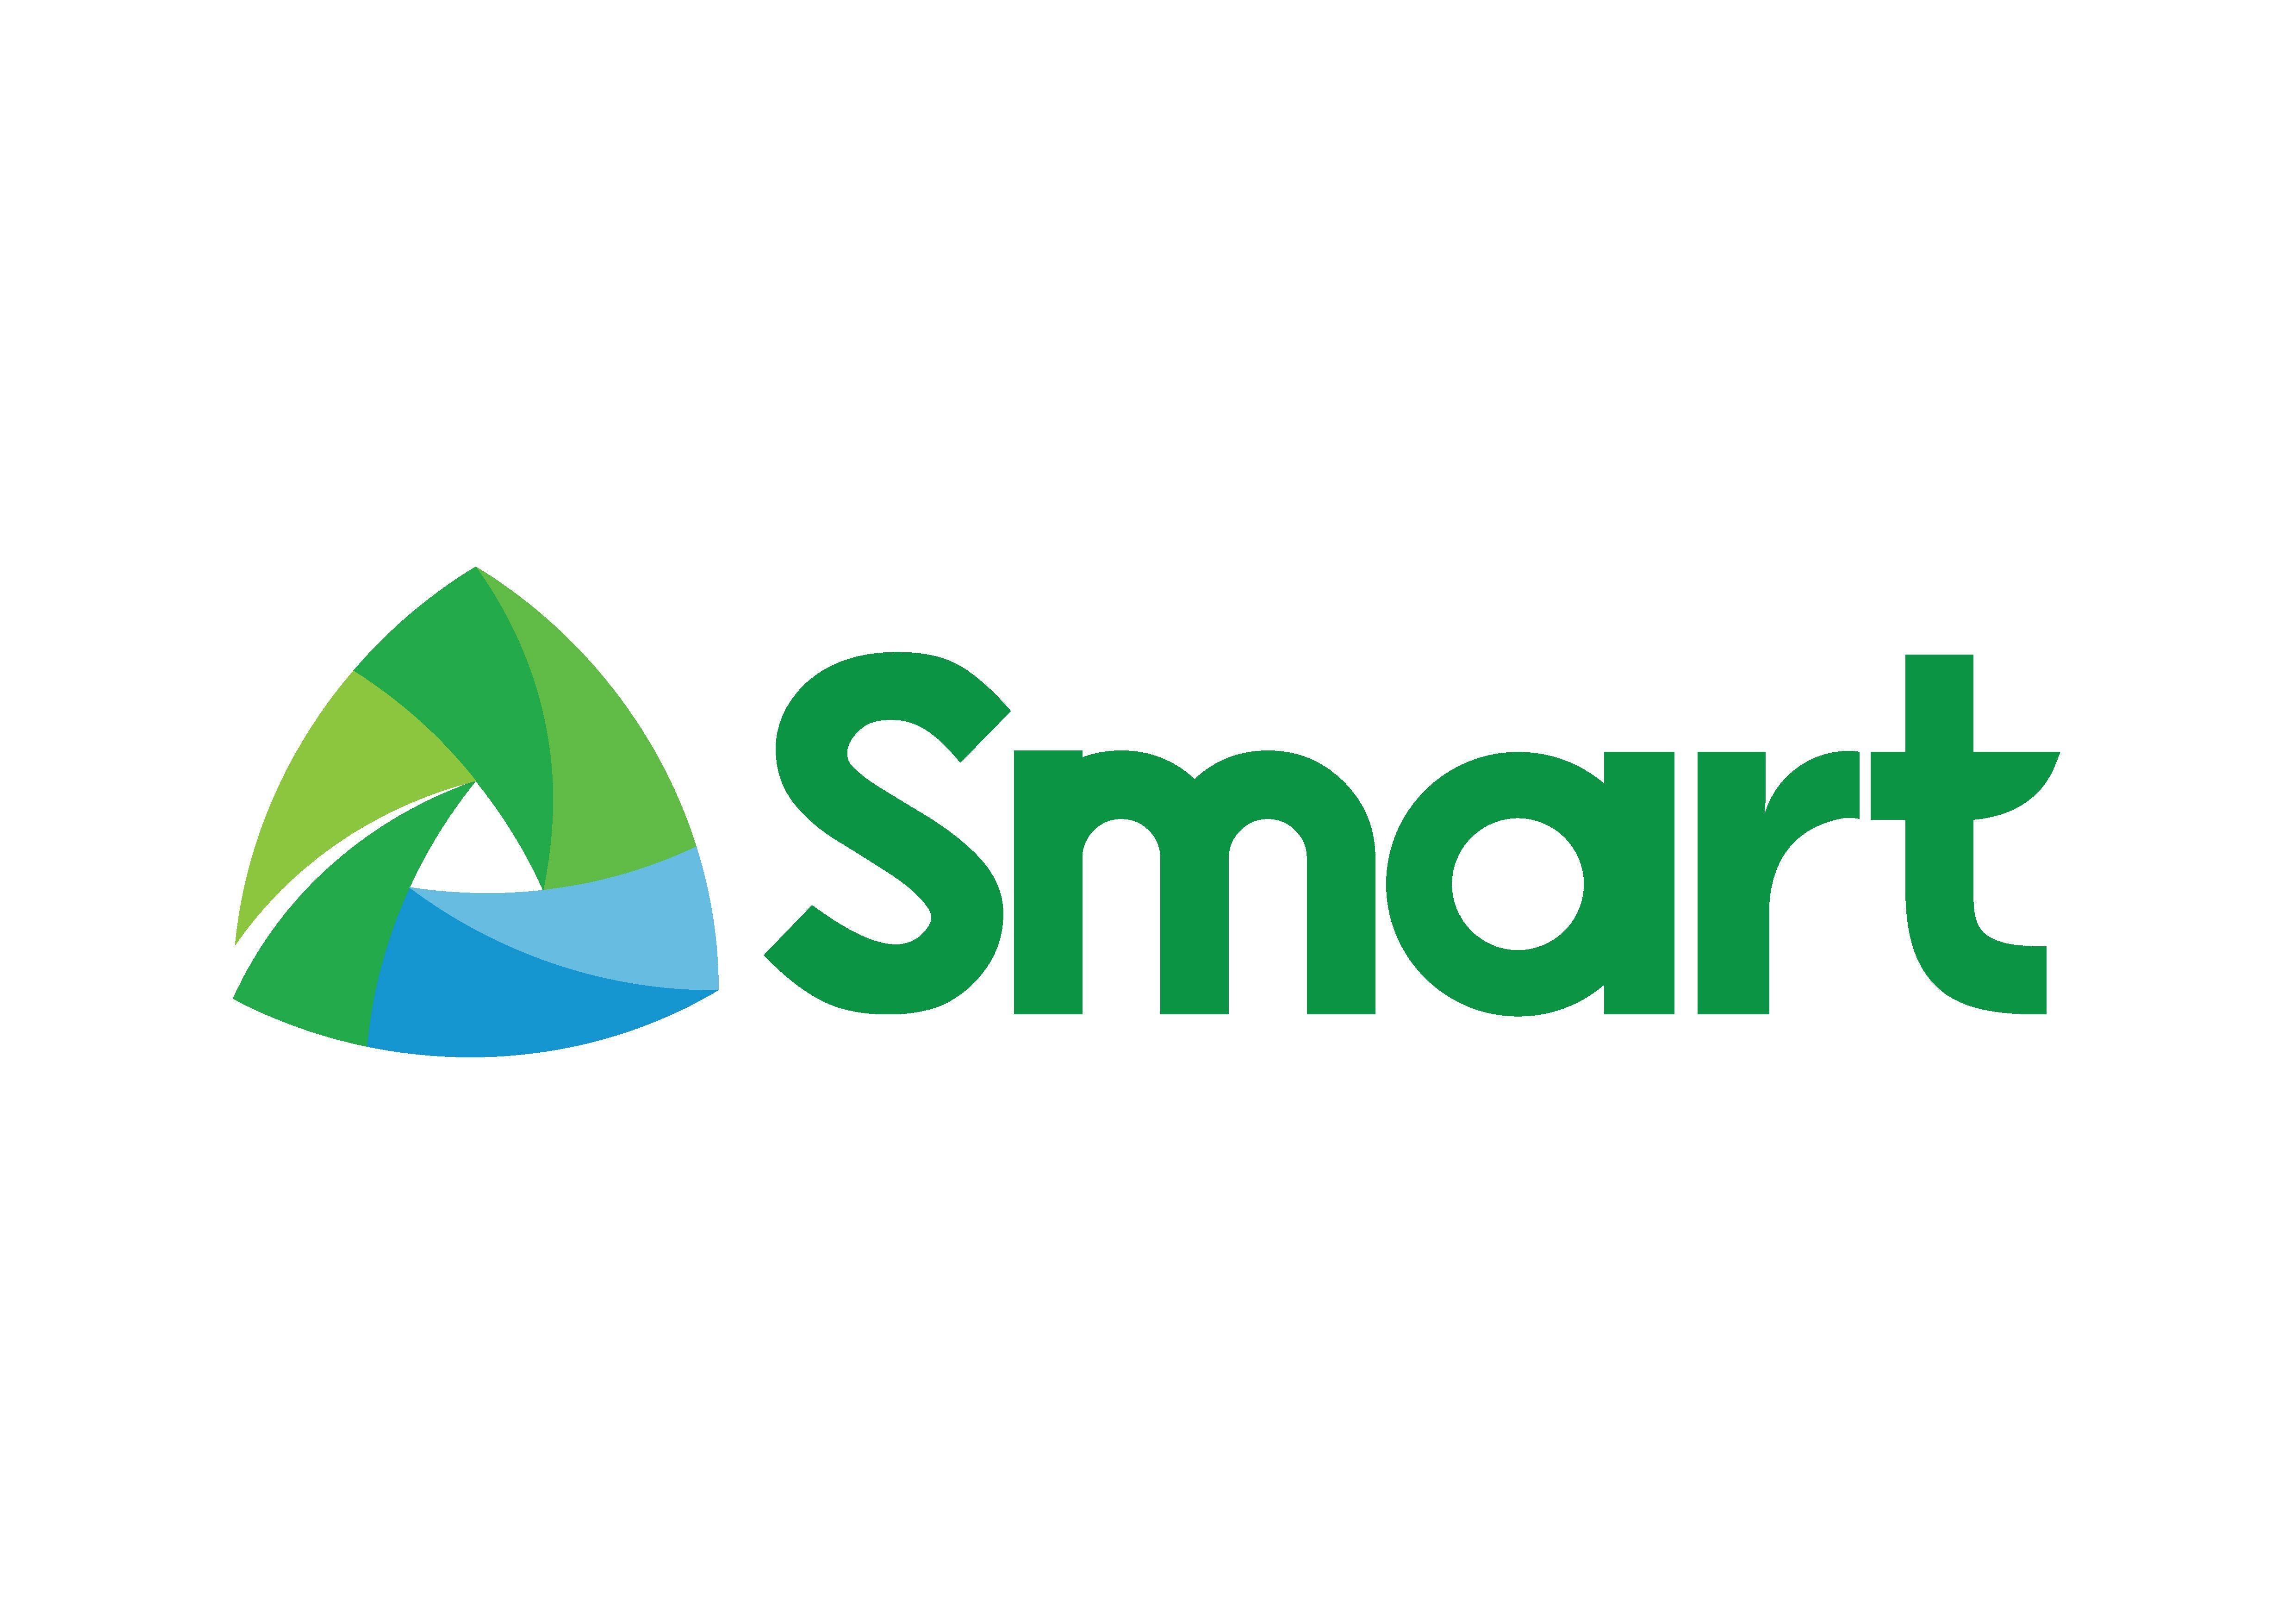 PLDT Logo - PLDT, Smart unveil new logo in line with 'digital pivot'